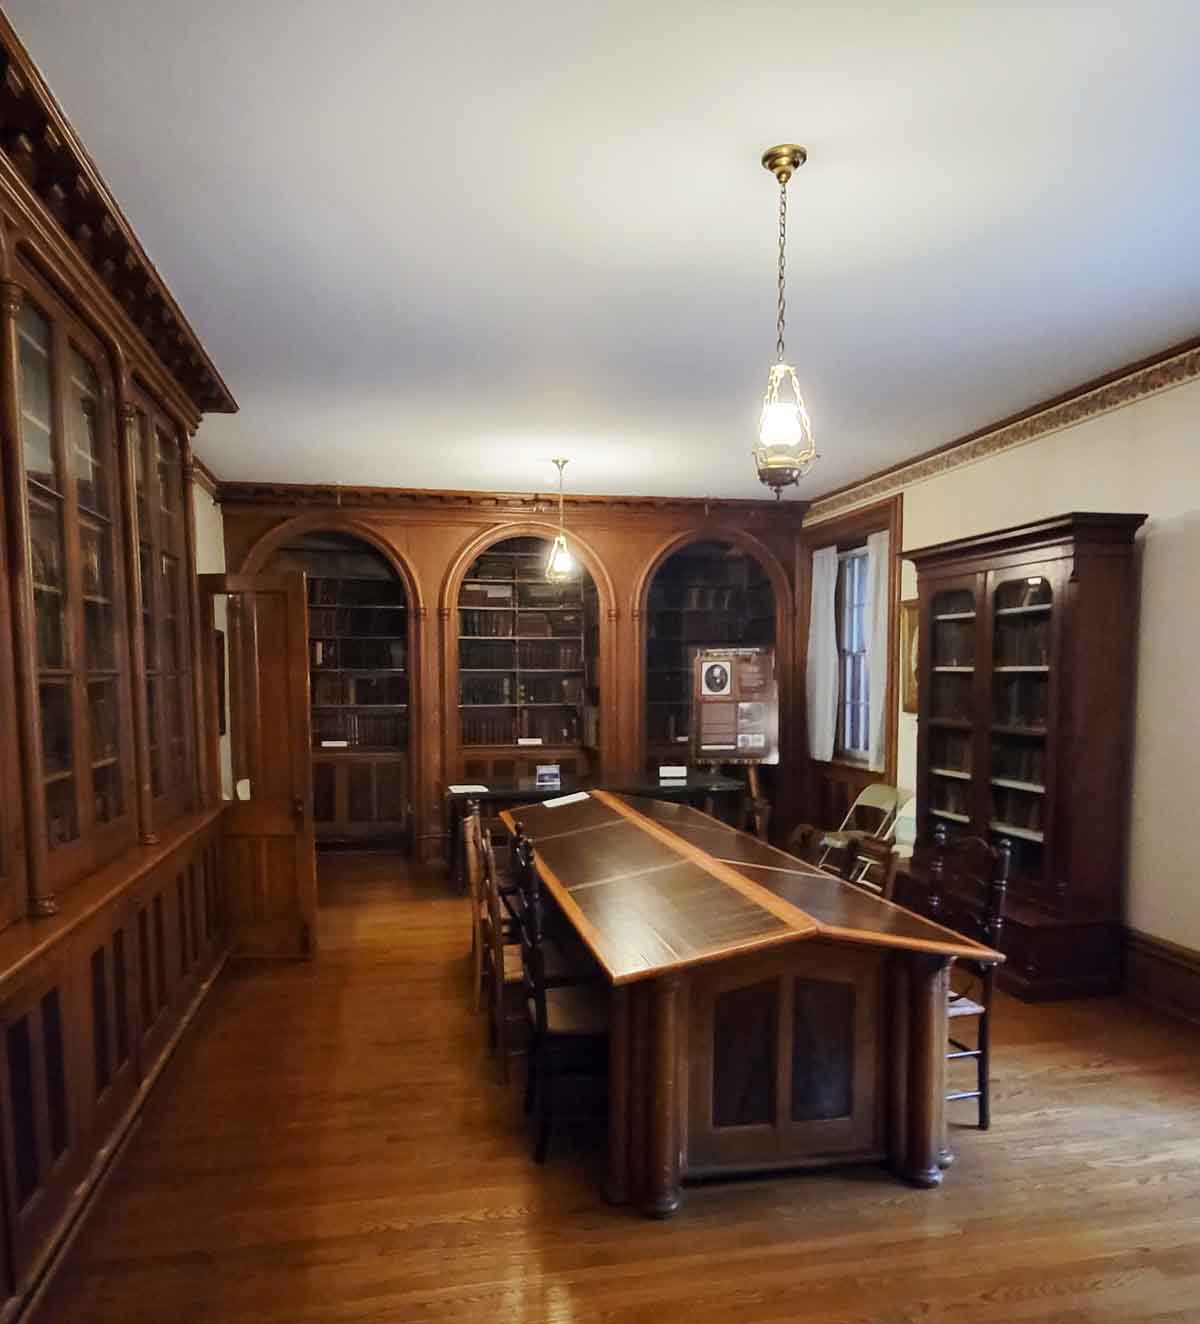 The study room